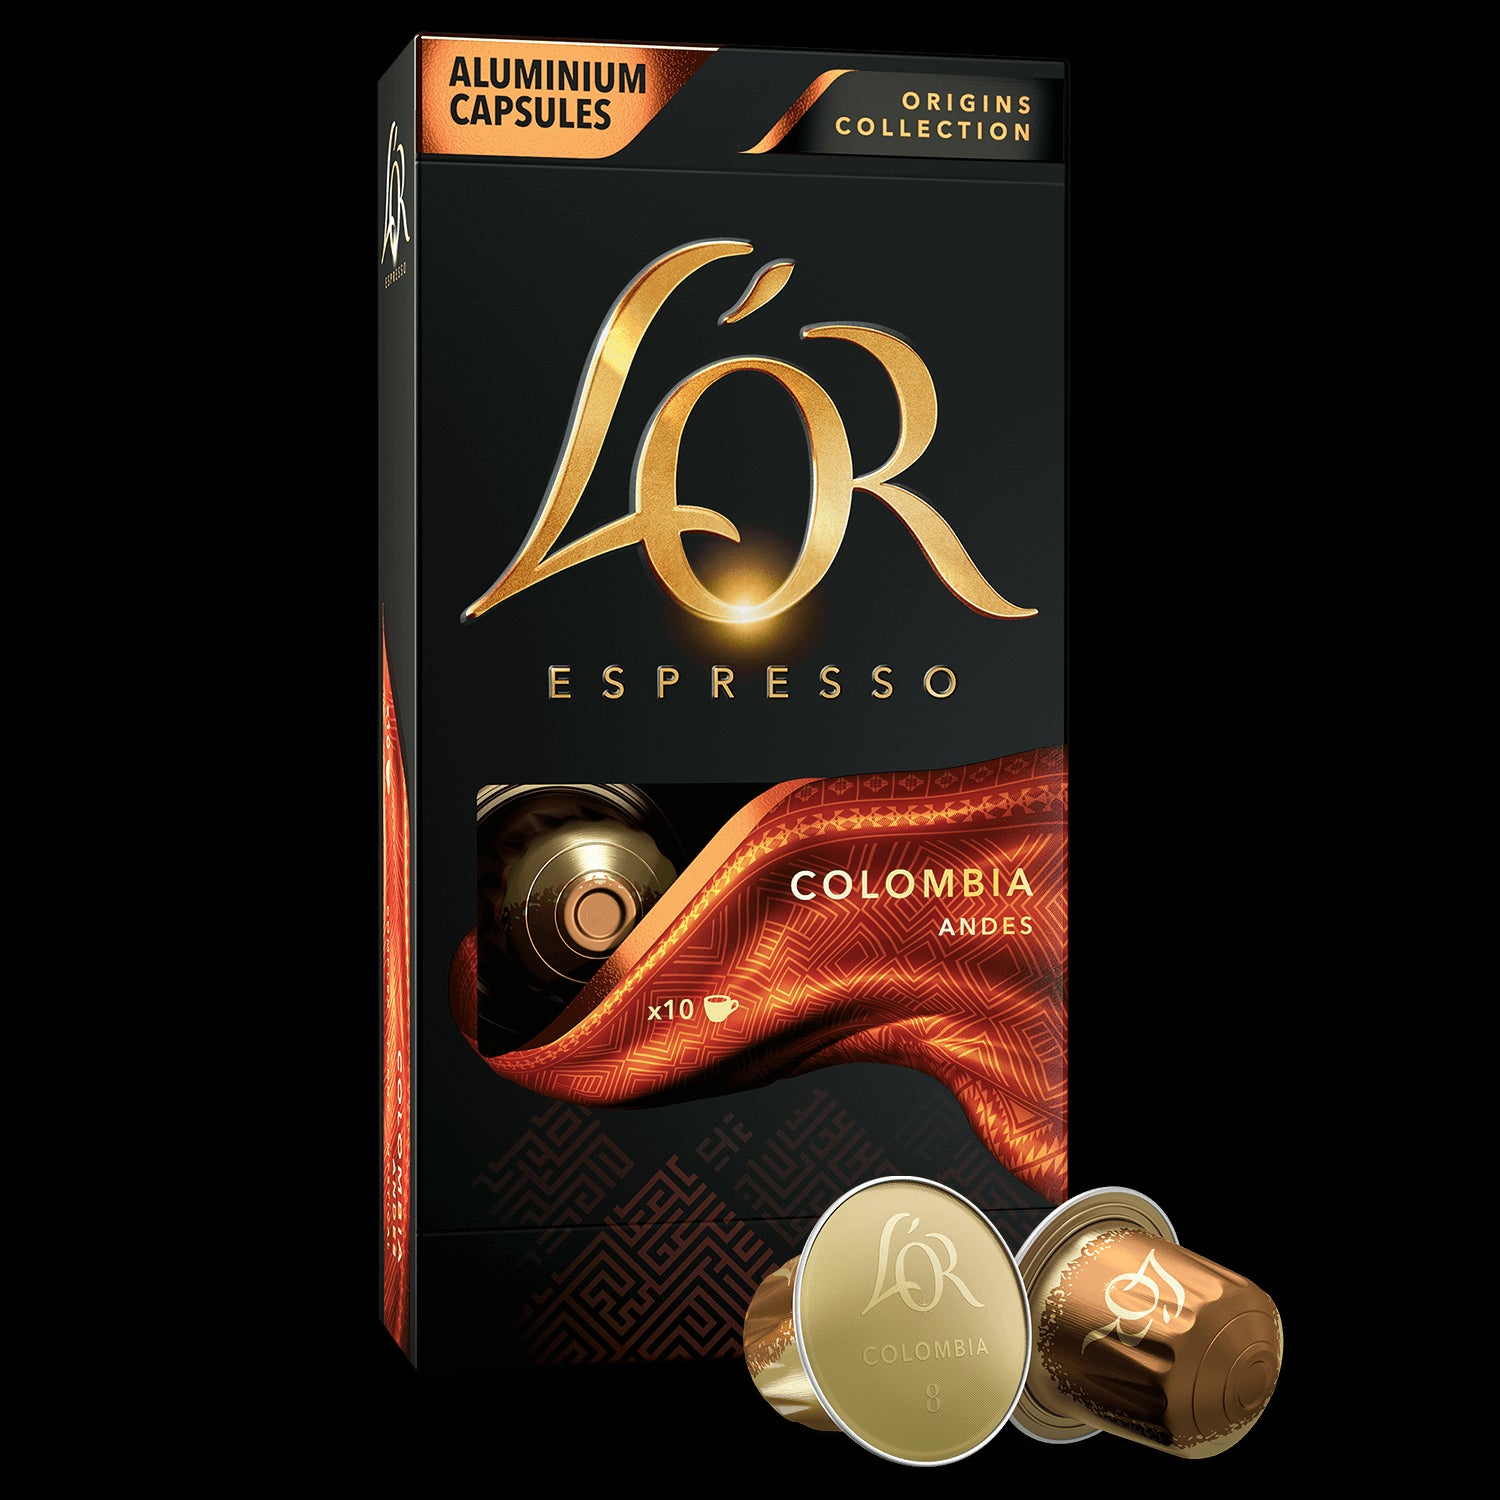 L'OR Espresso Columbia - Intensity 8